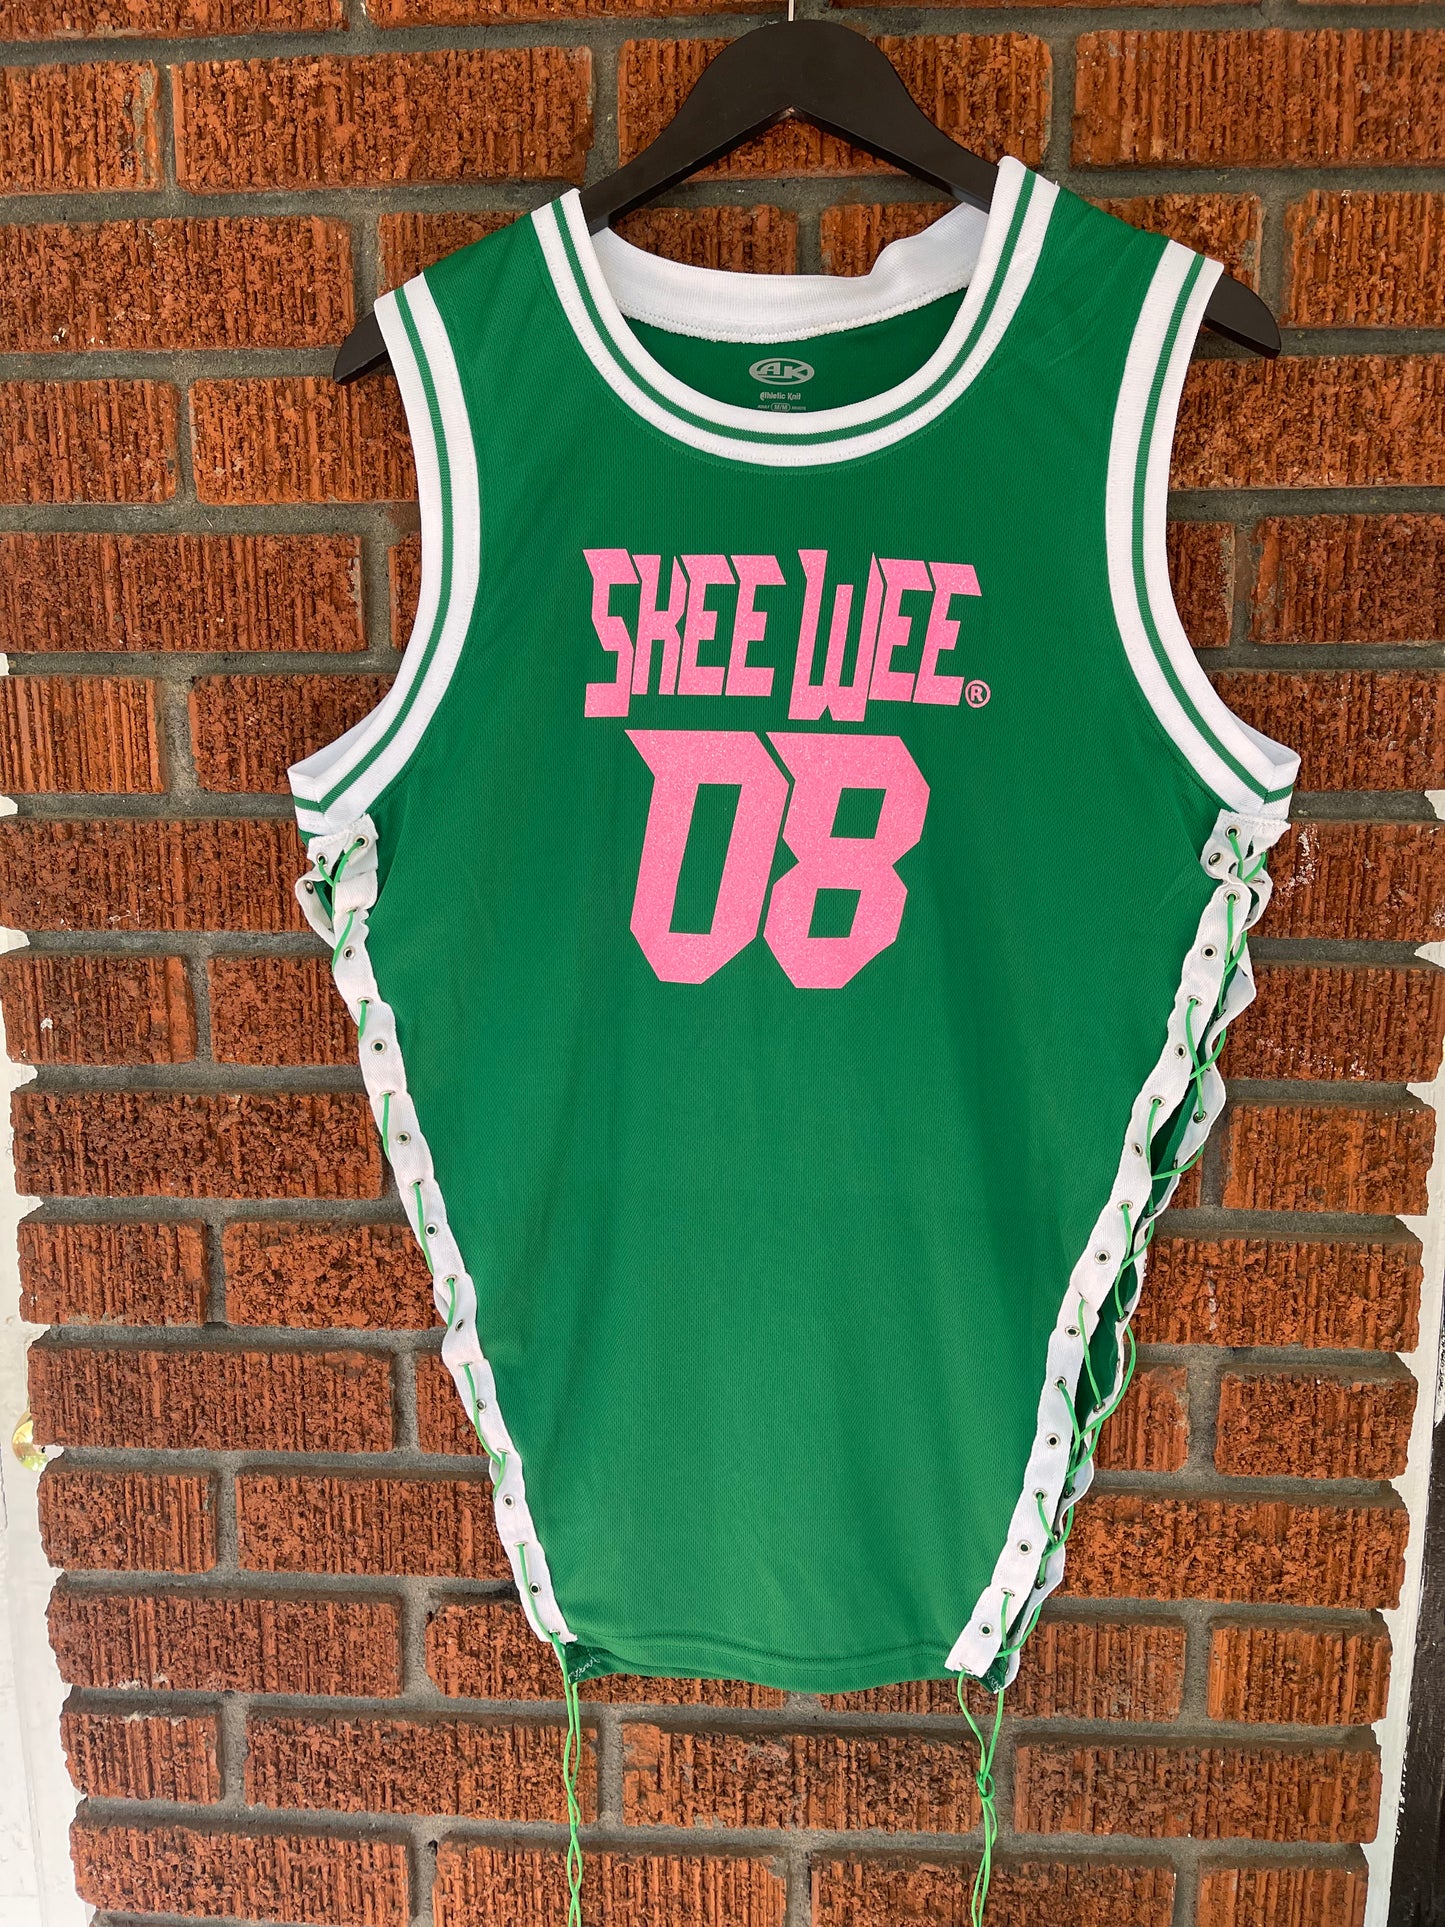 The Hot Pink Skee Wee 08 Green Jersey Dress - [CCL Designs] - AKA Alpha Kappa Alpha Pink and Green handmade